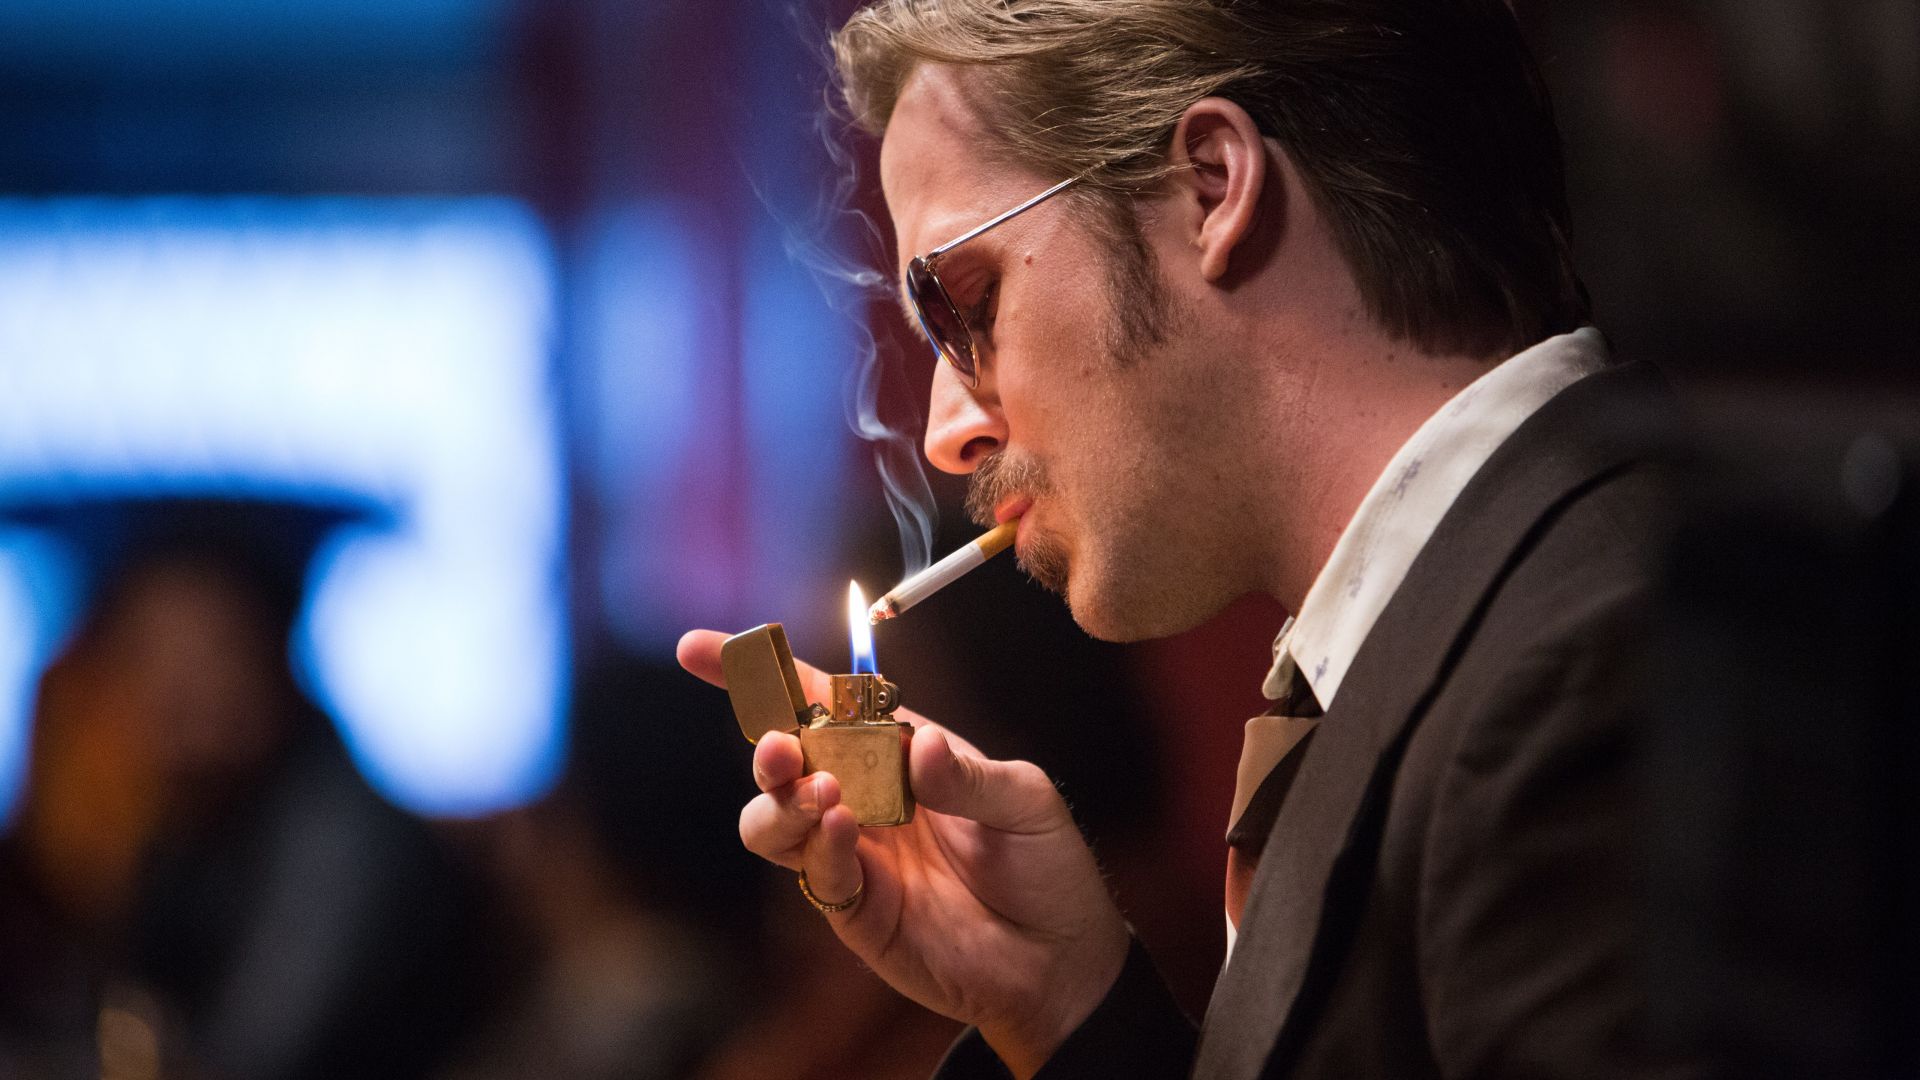 Славные парни, Райан Гослинг, курит, лучшие фильмы 2016, The Nice Guys, Ryan Gosling, smoke, best movies of 2016 (horizontal)